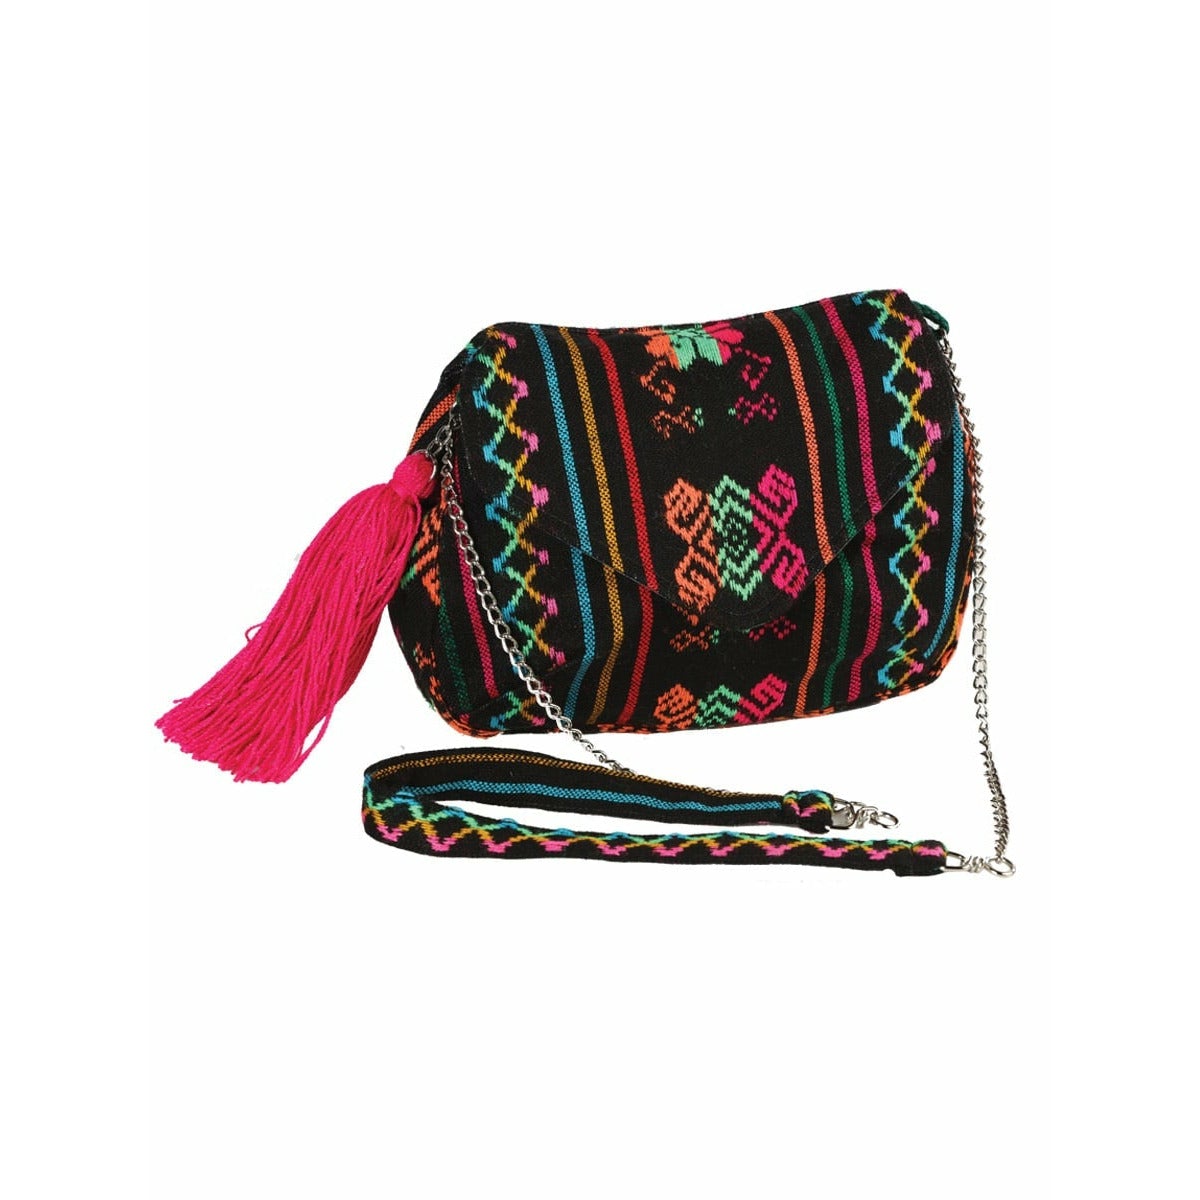 Hand made Mexican Bag - CharroAzteca.com